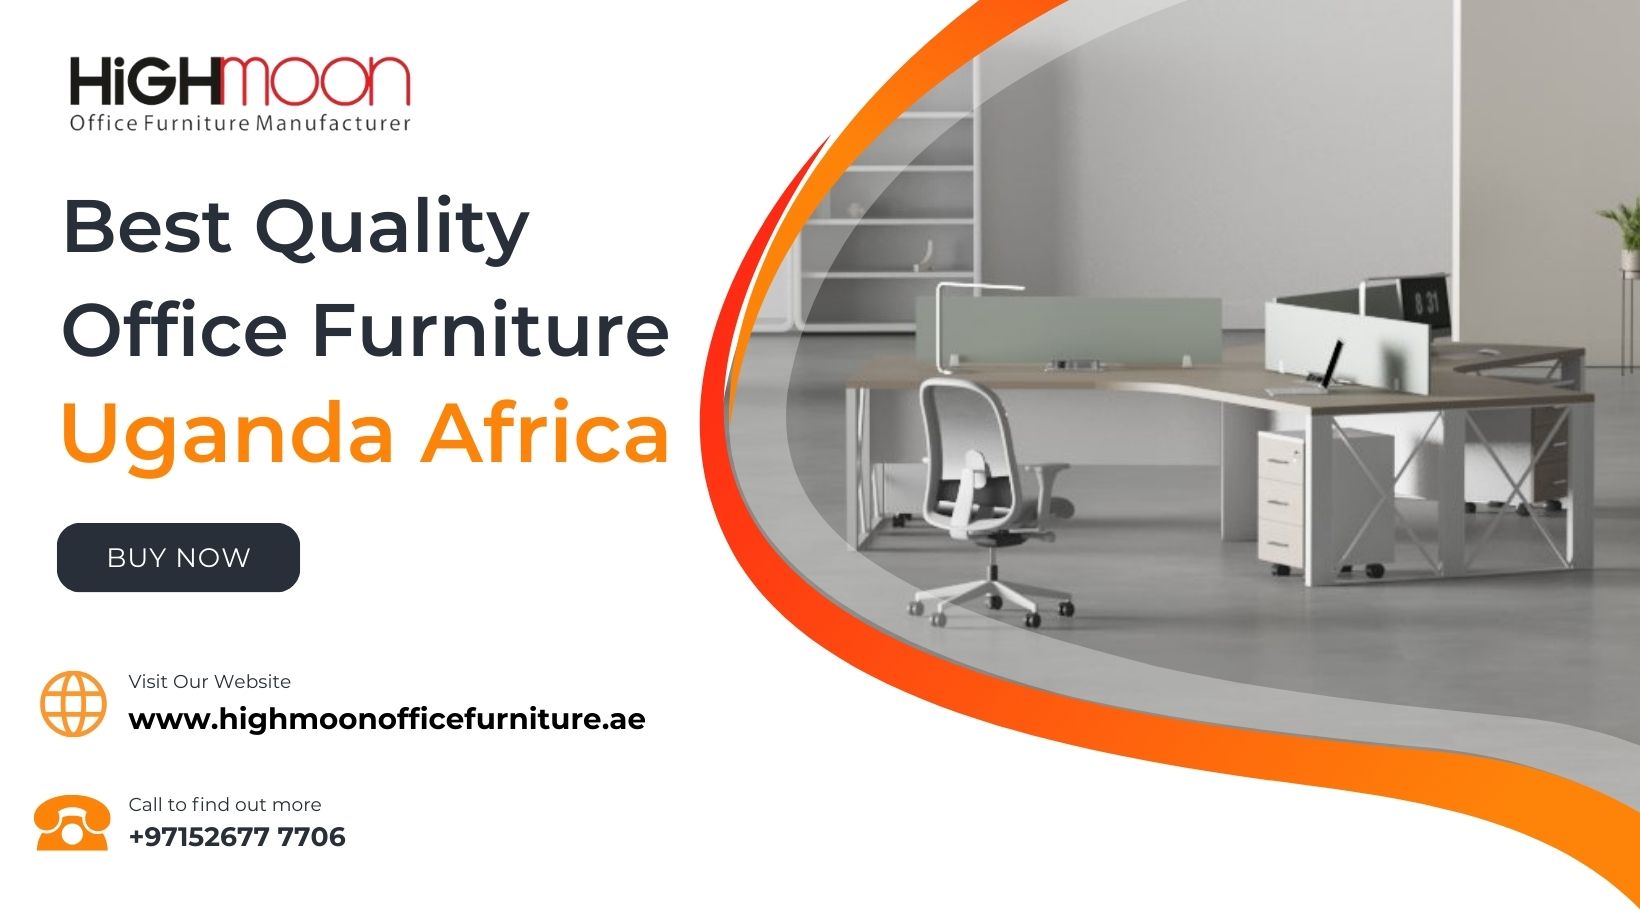 Best Quality Office Furniture in Uganda Africa